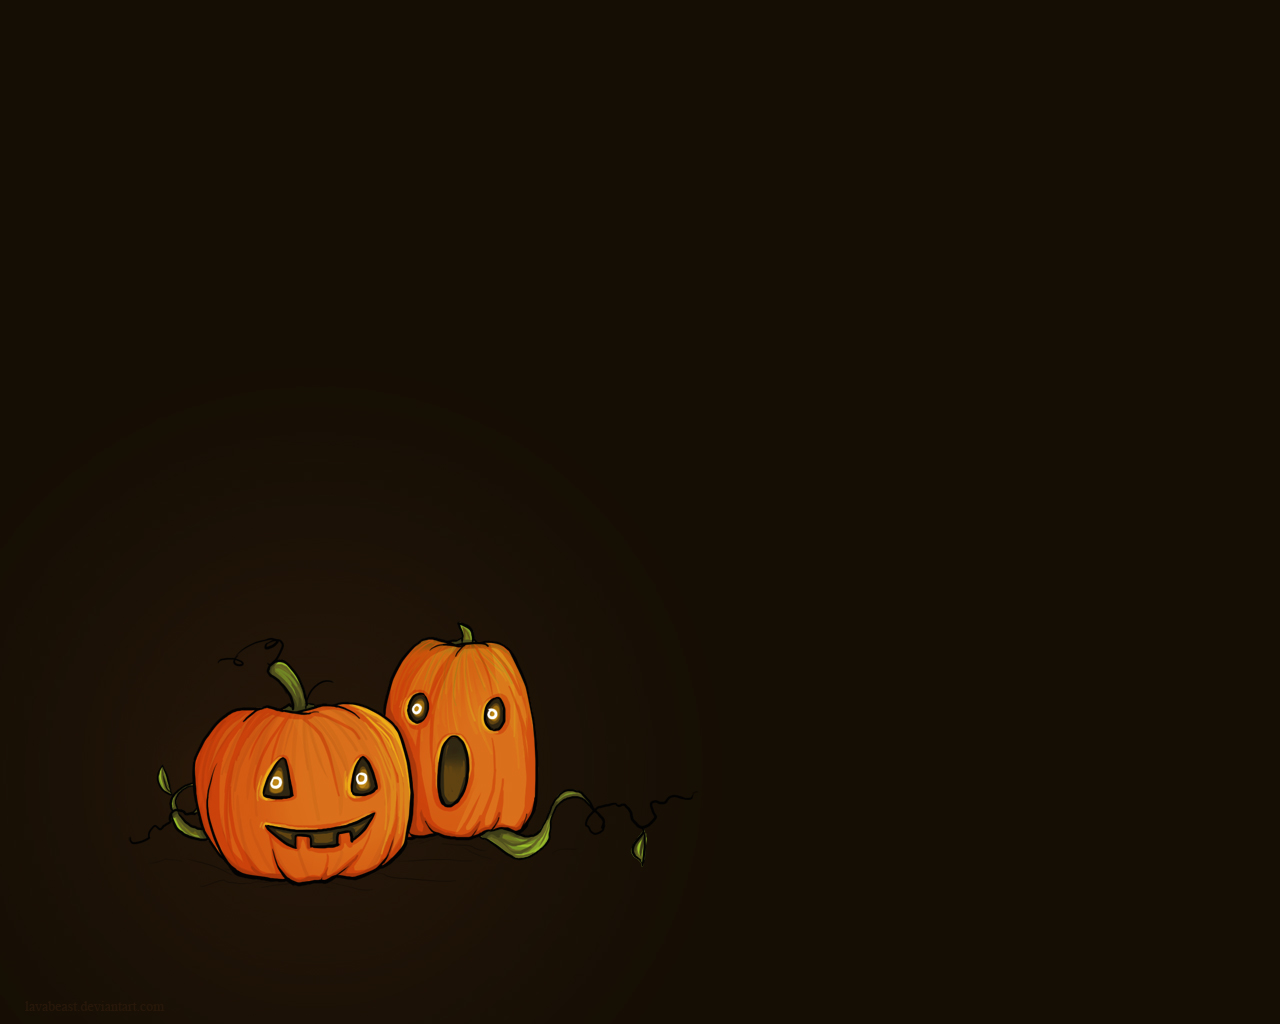 Cute Halloween Desktop Background Image Amp Pictures Becuo